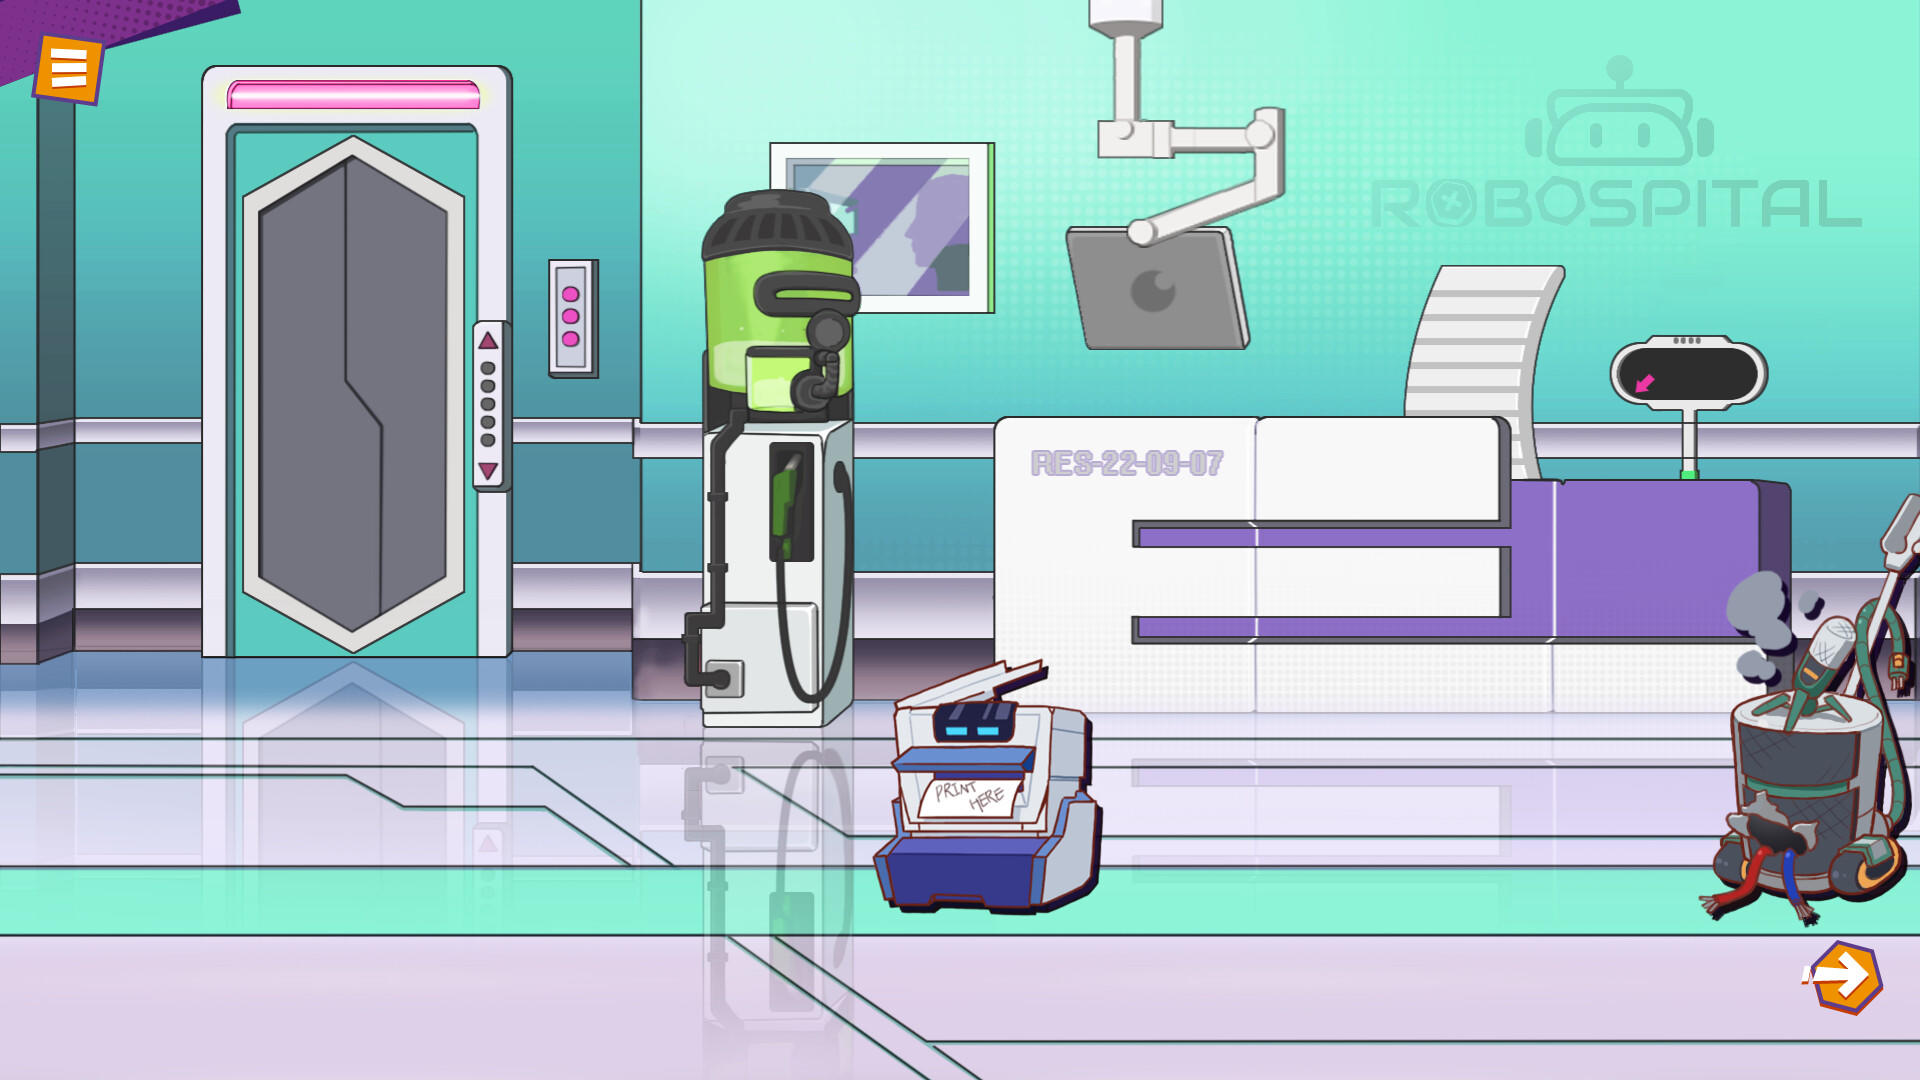 Screenshot 1 of Robotspital 